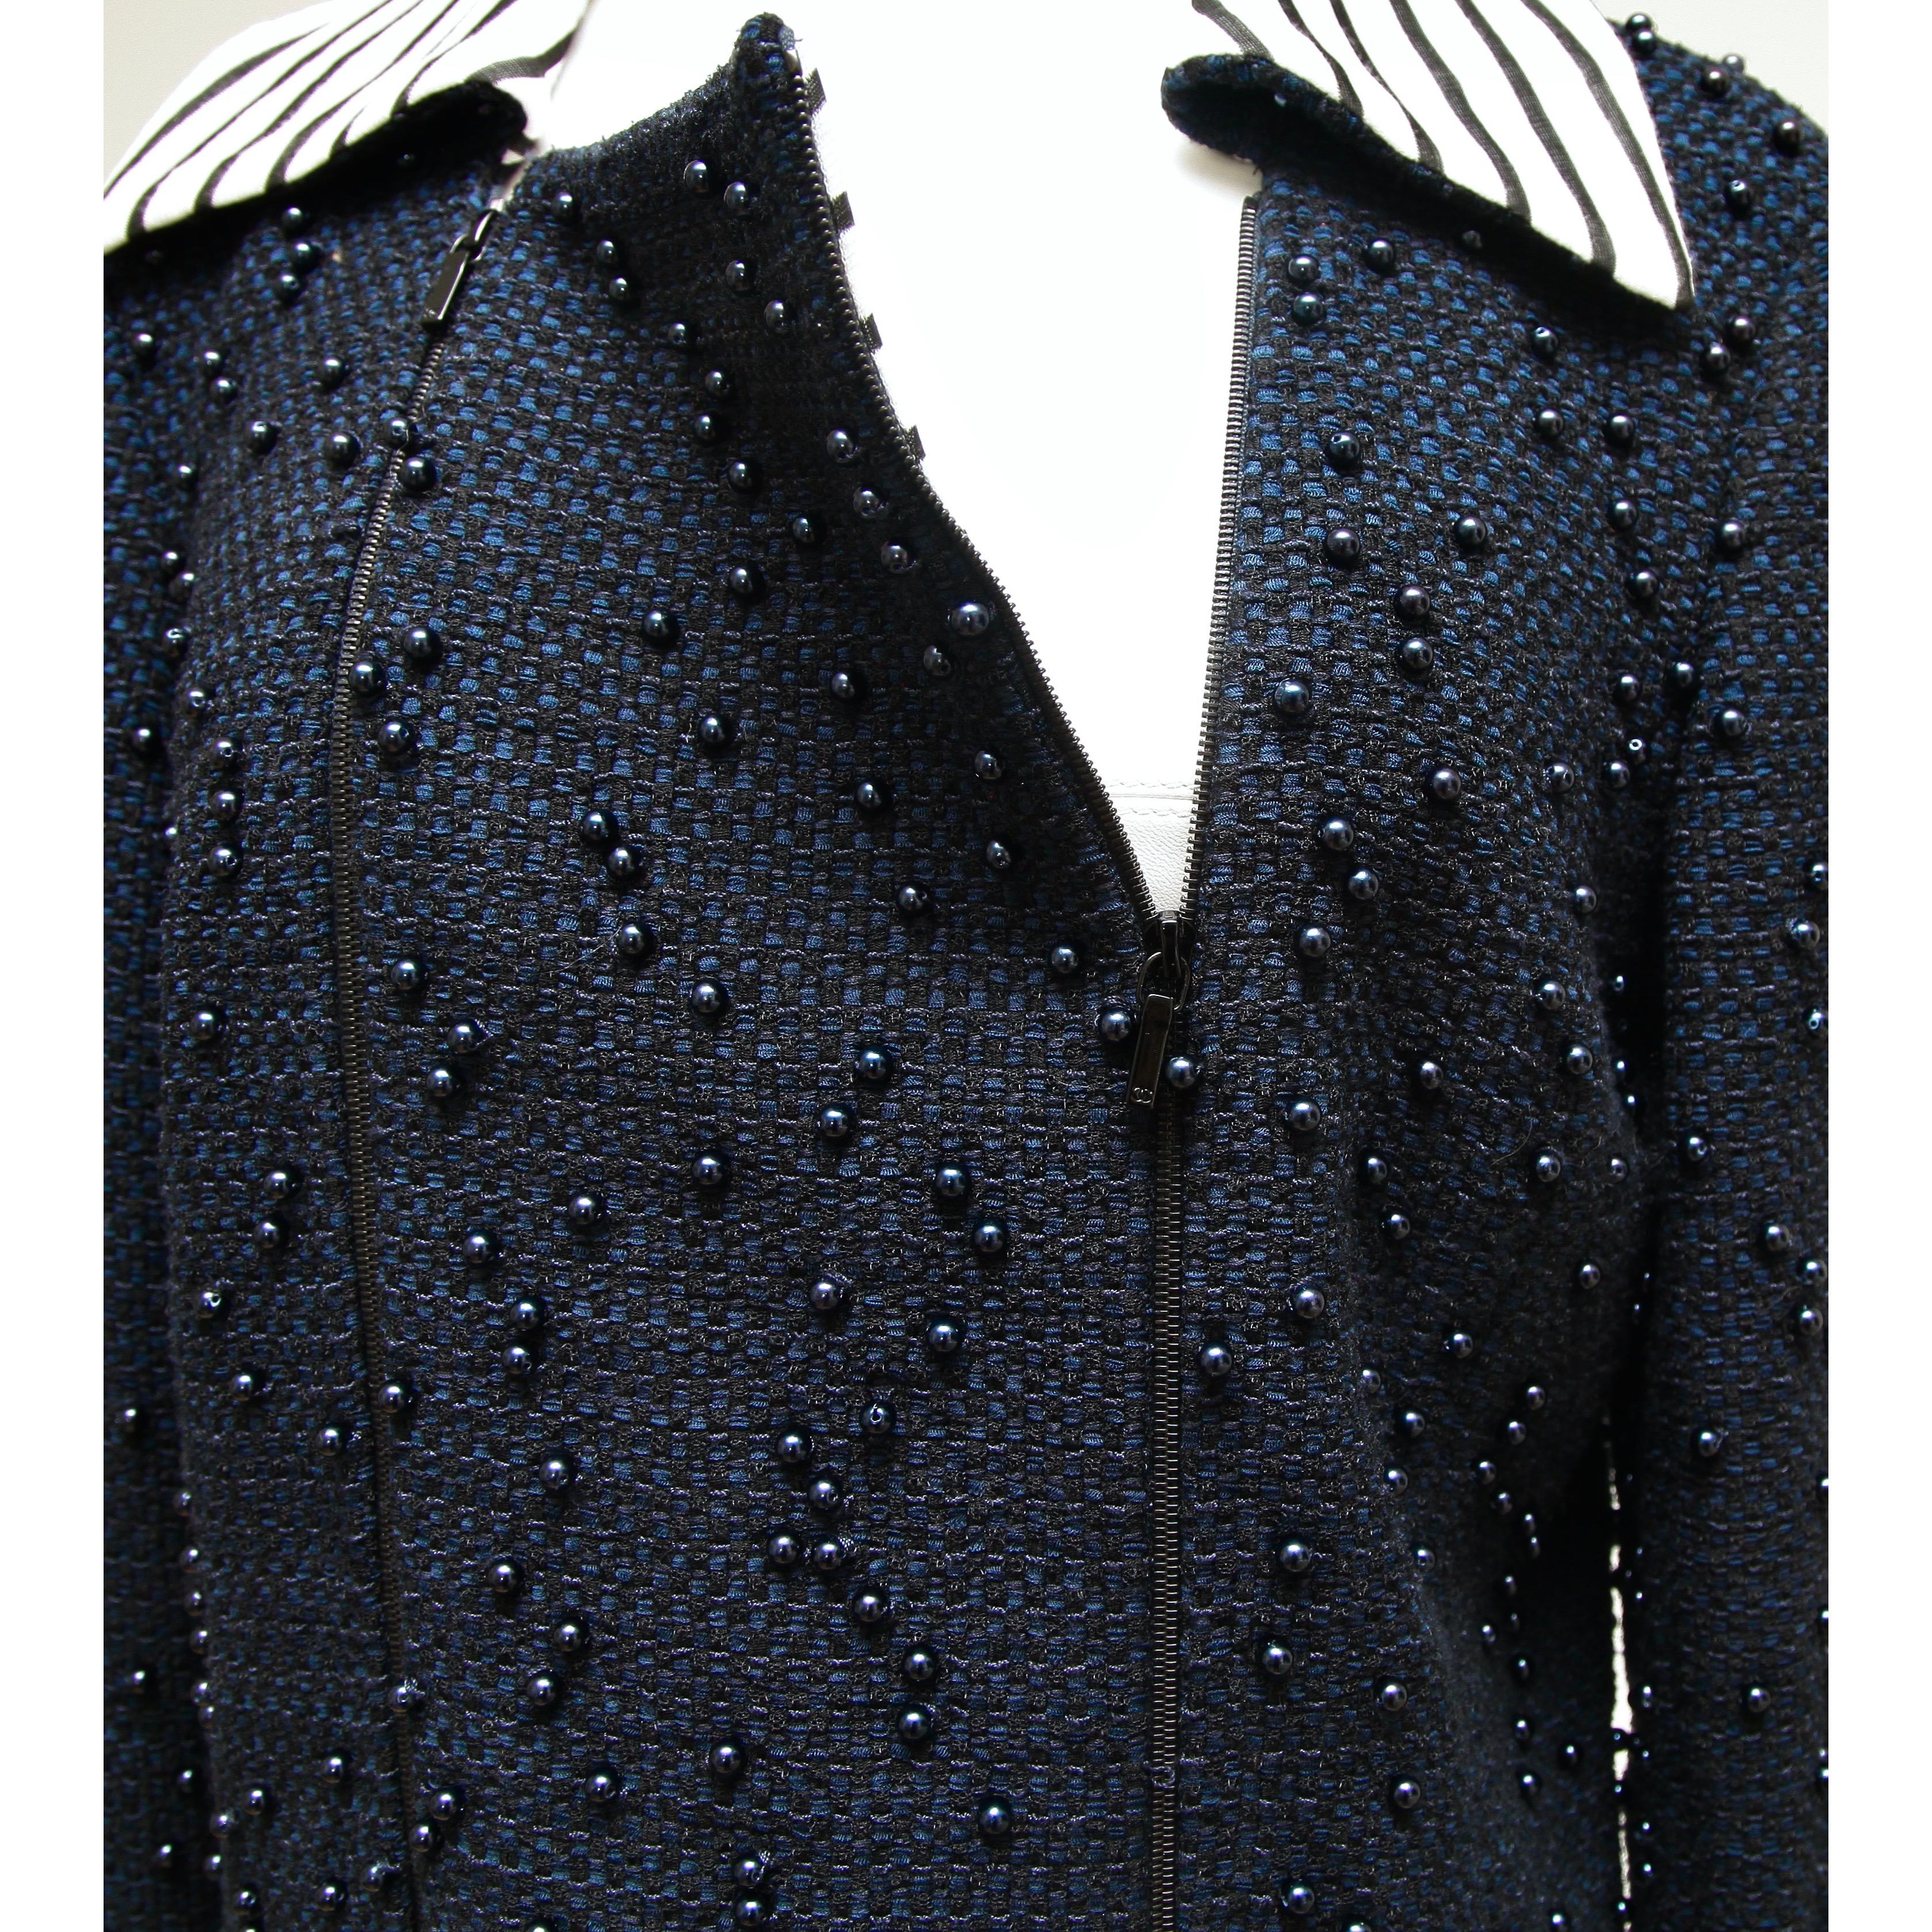 CHANEL Jacket Blazer Coat Tweed Navy Blue Beaded Buttons Zipper 2017 Sz 40 For Sale 1